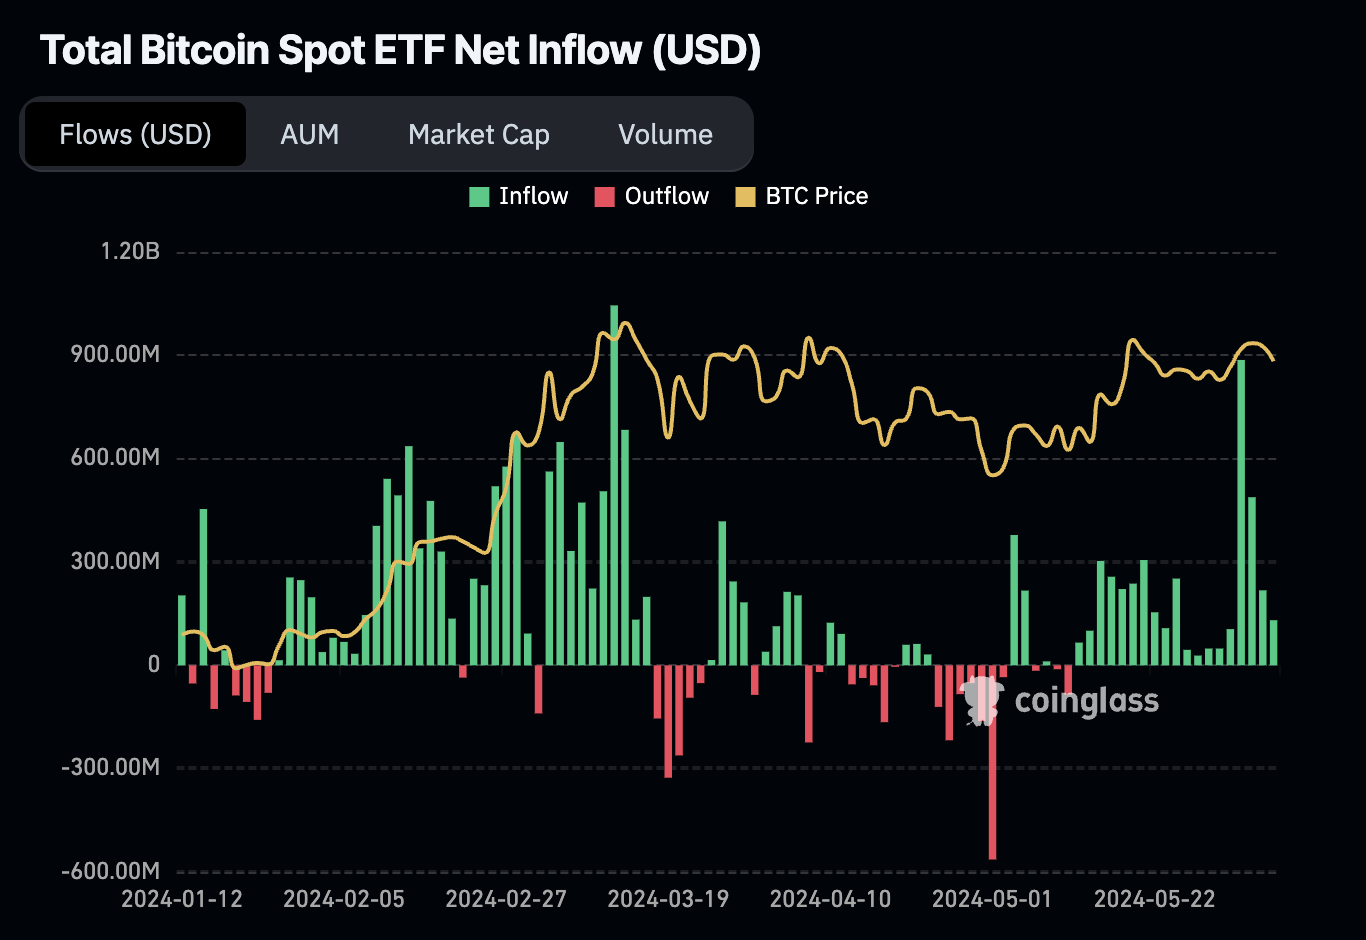 Spot BTC ETF net flows